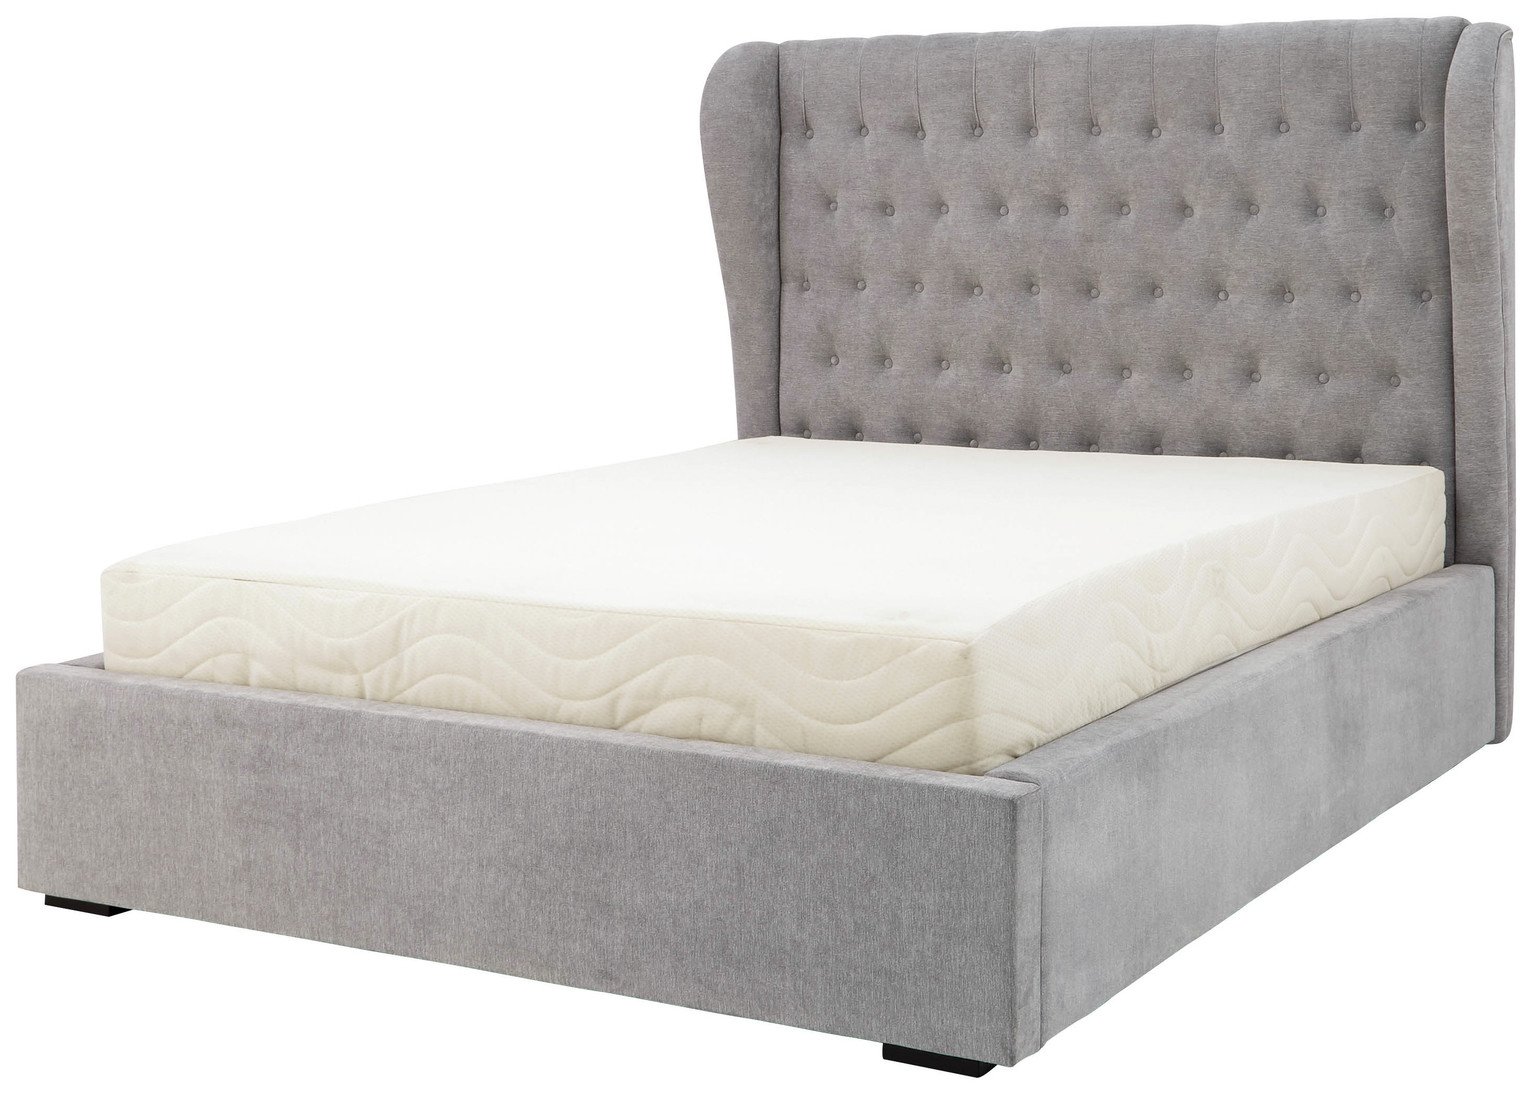 GFW Dakota Double End Lift Ottoman Fabric Bed Frame - Grey